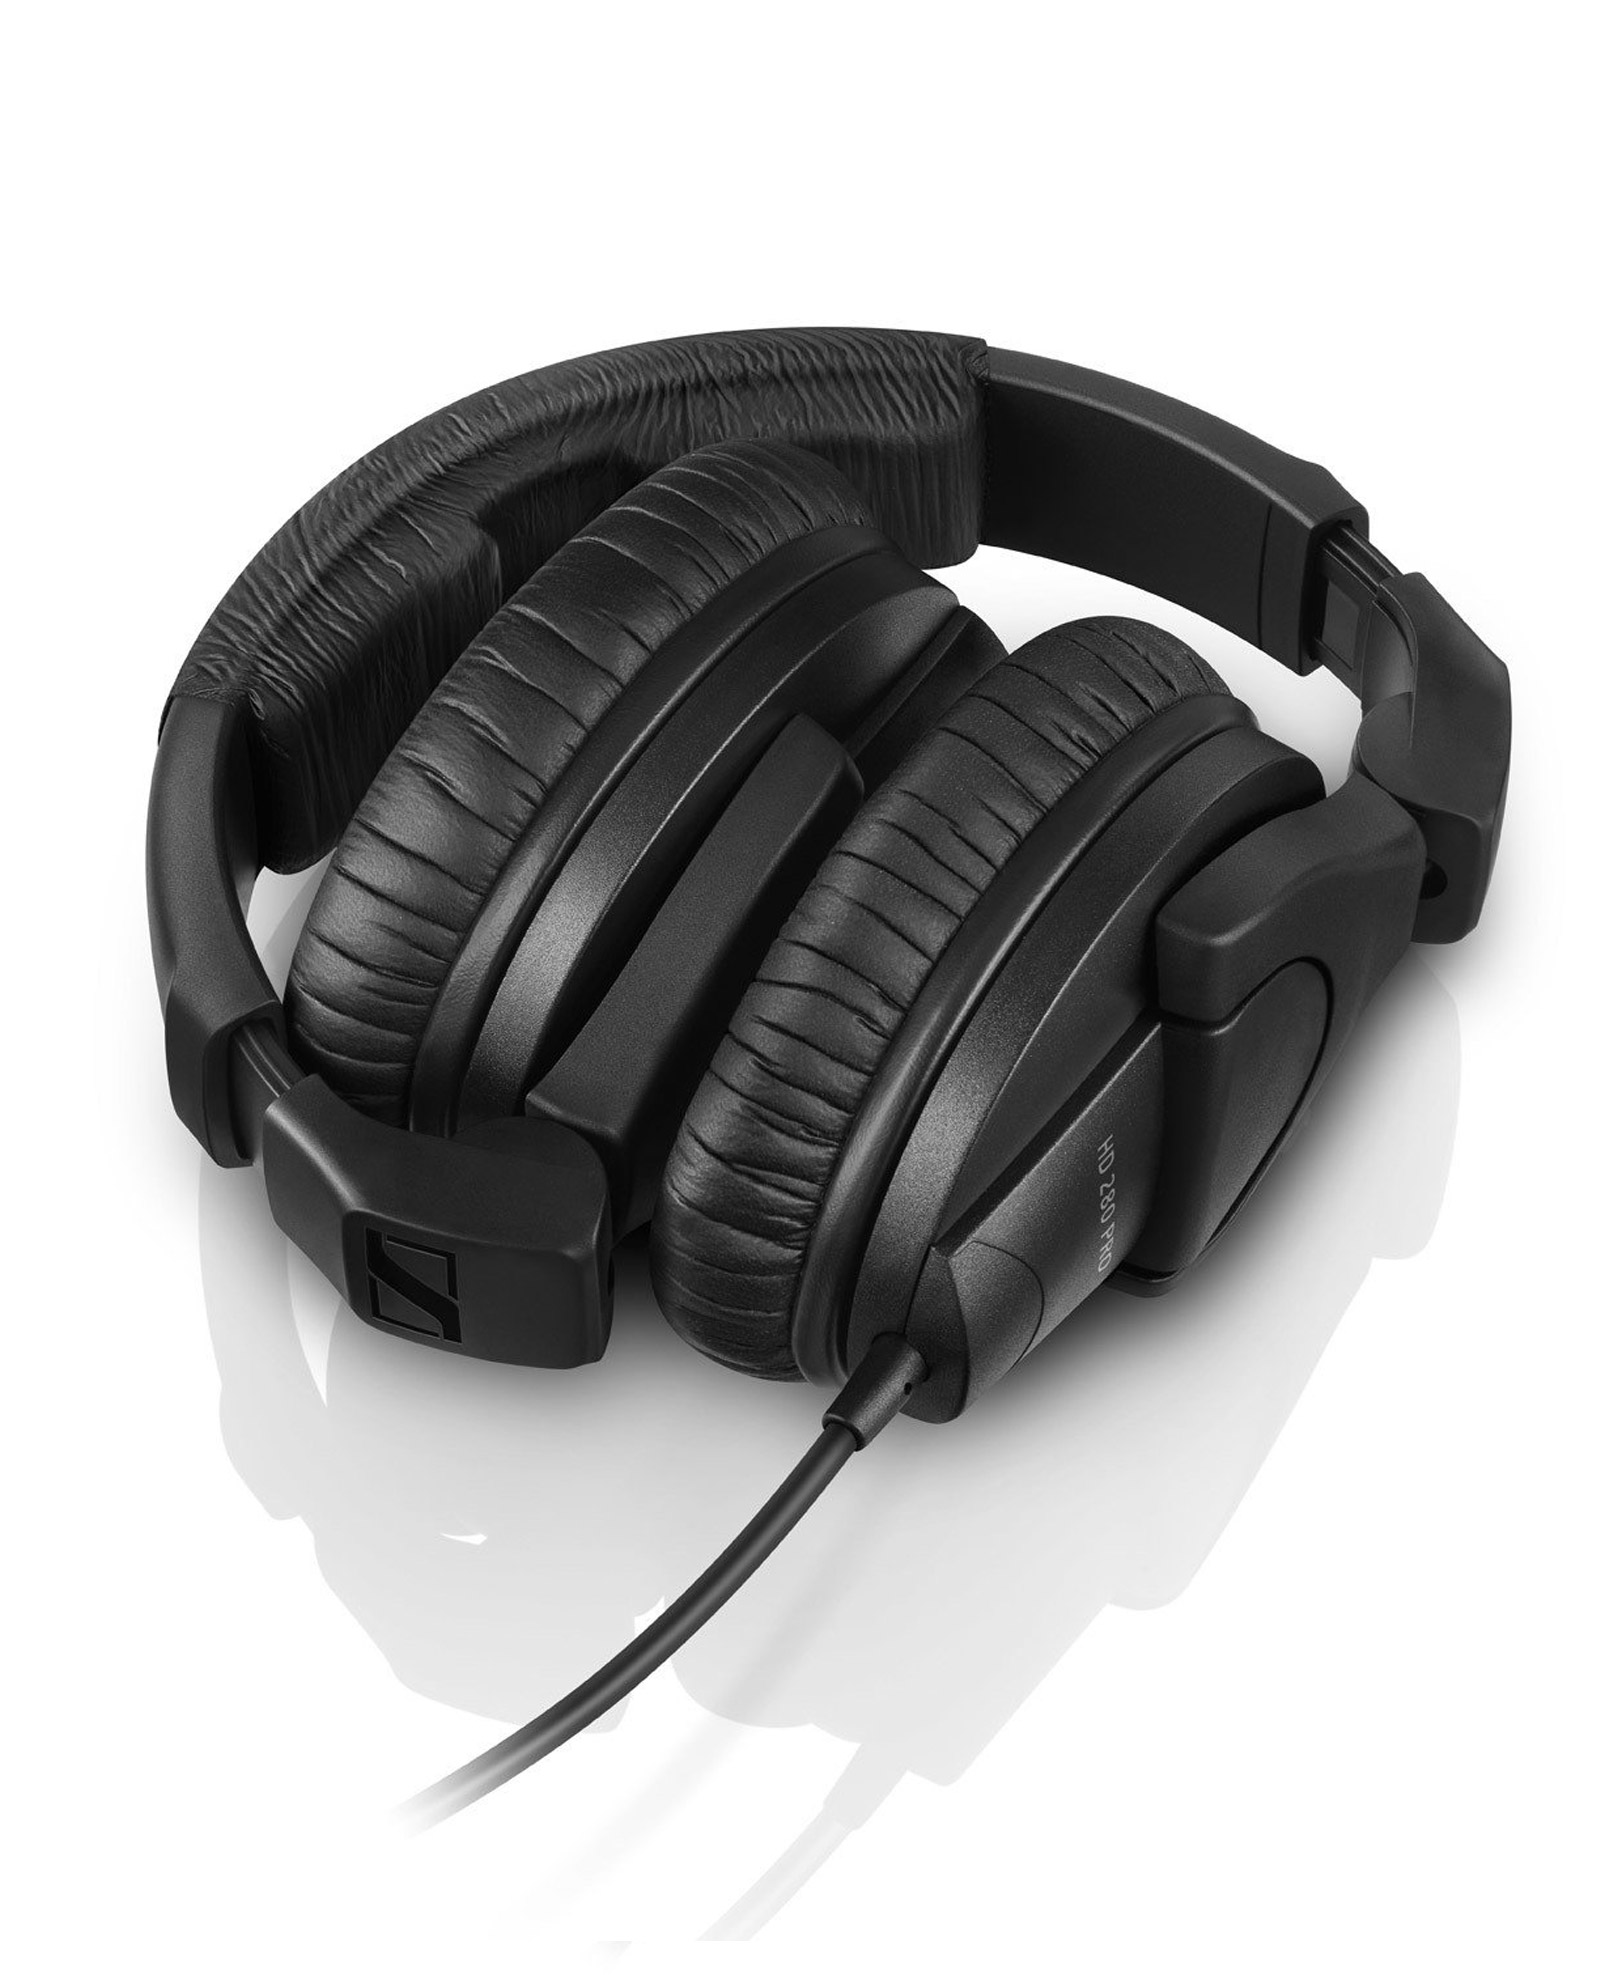 Sennheiser Hd 280 Pro Over Ear Headphones 2